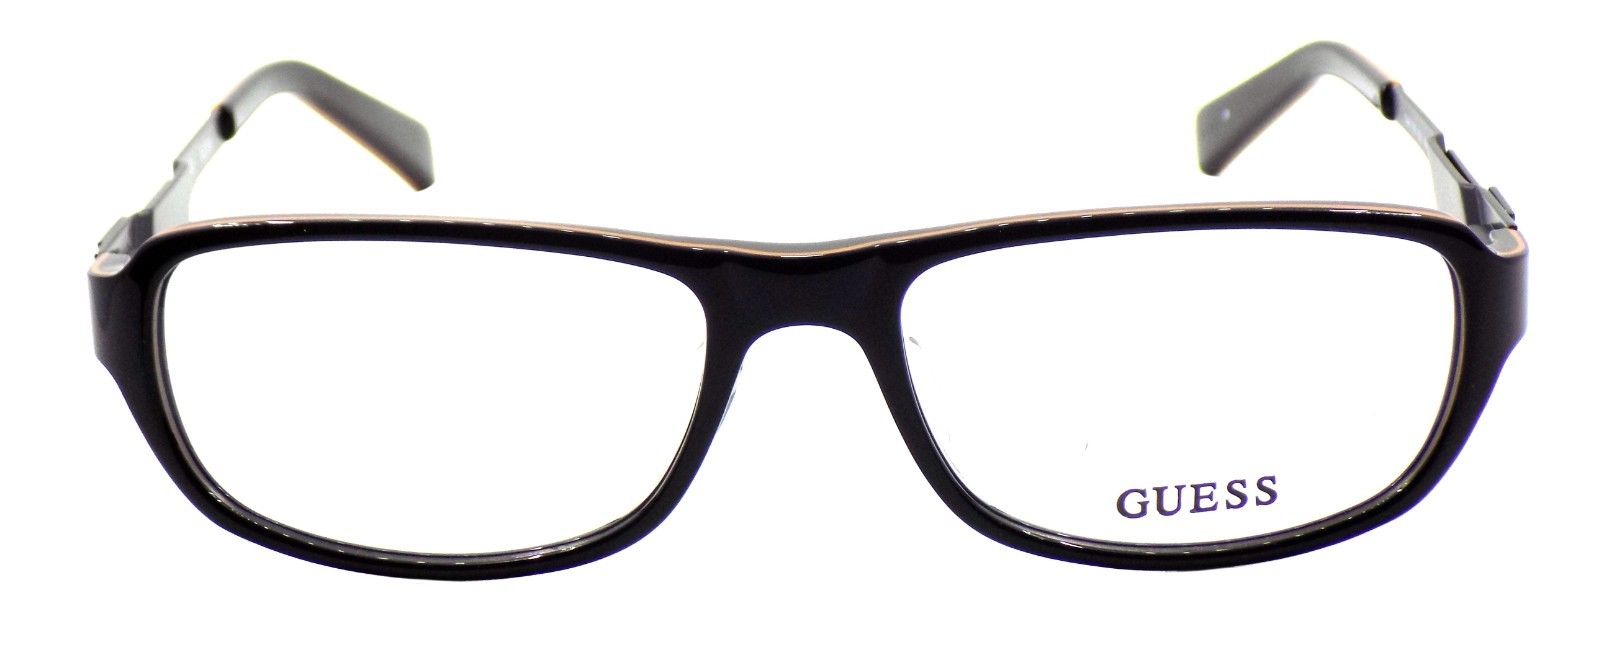 2-GUESS GUA1779 BLK Men's ASIAN Fit Eyeglasses Frames 55-17-145 Black + CASE-715583723894-IKSpecs